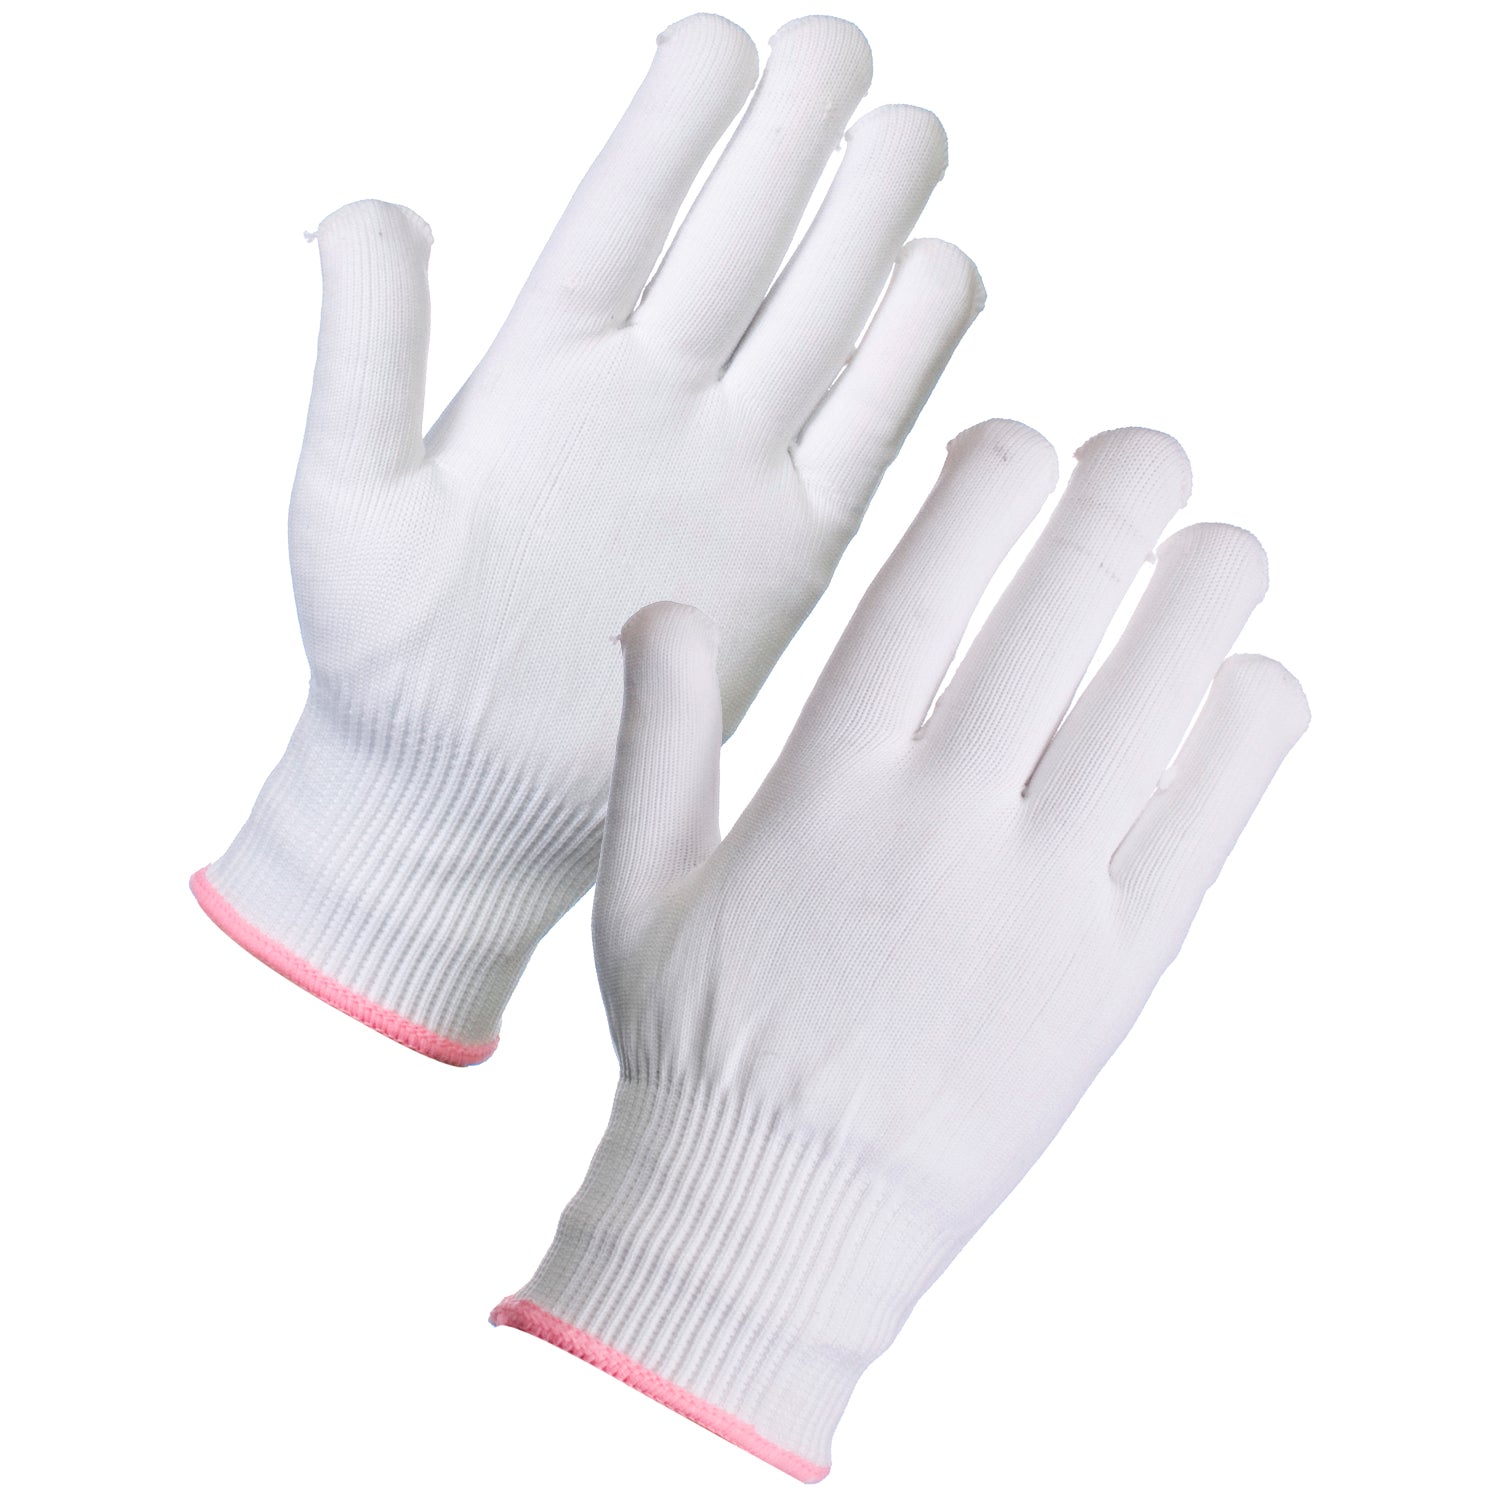 Supertouch Superthermal Gloves - White